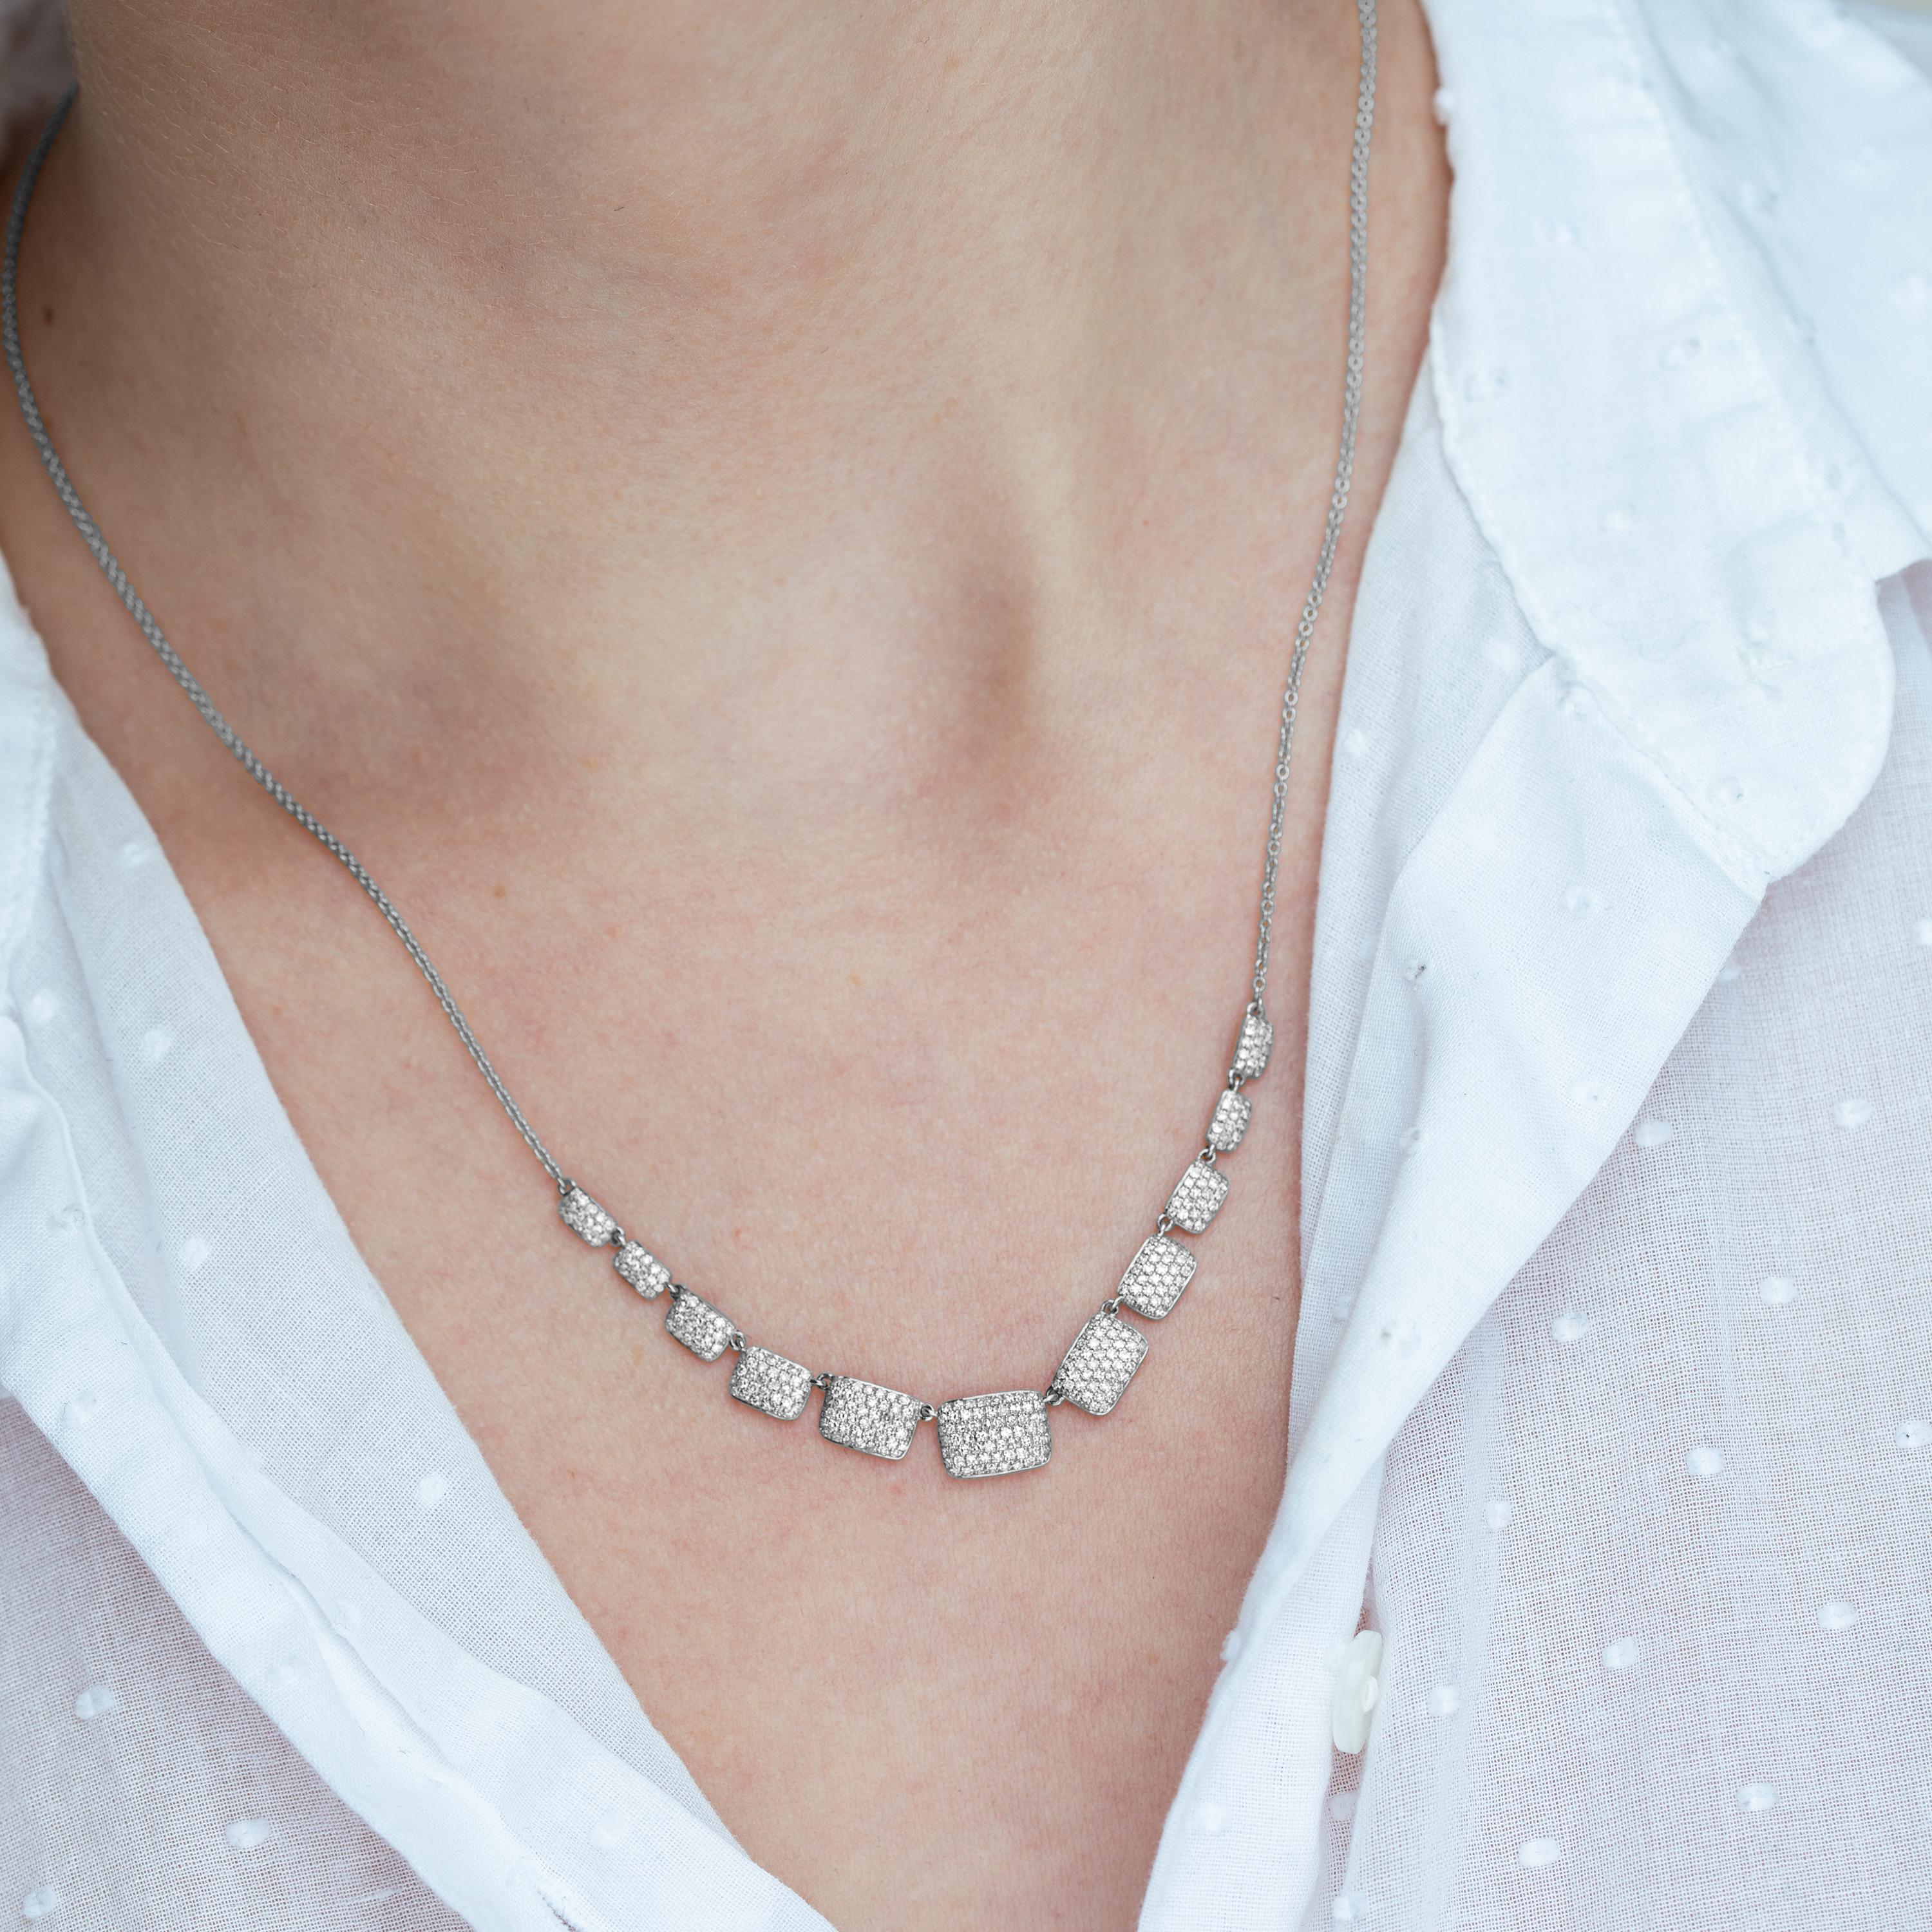 2010s statement necklaces